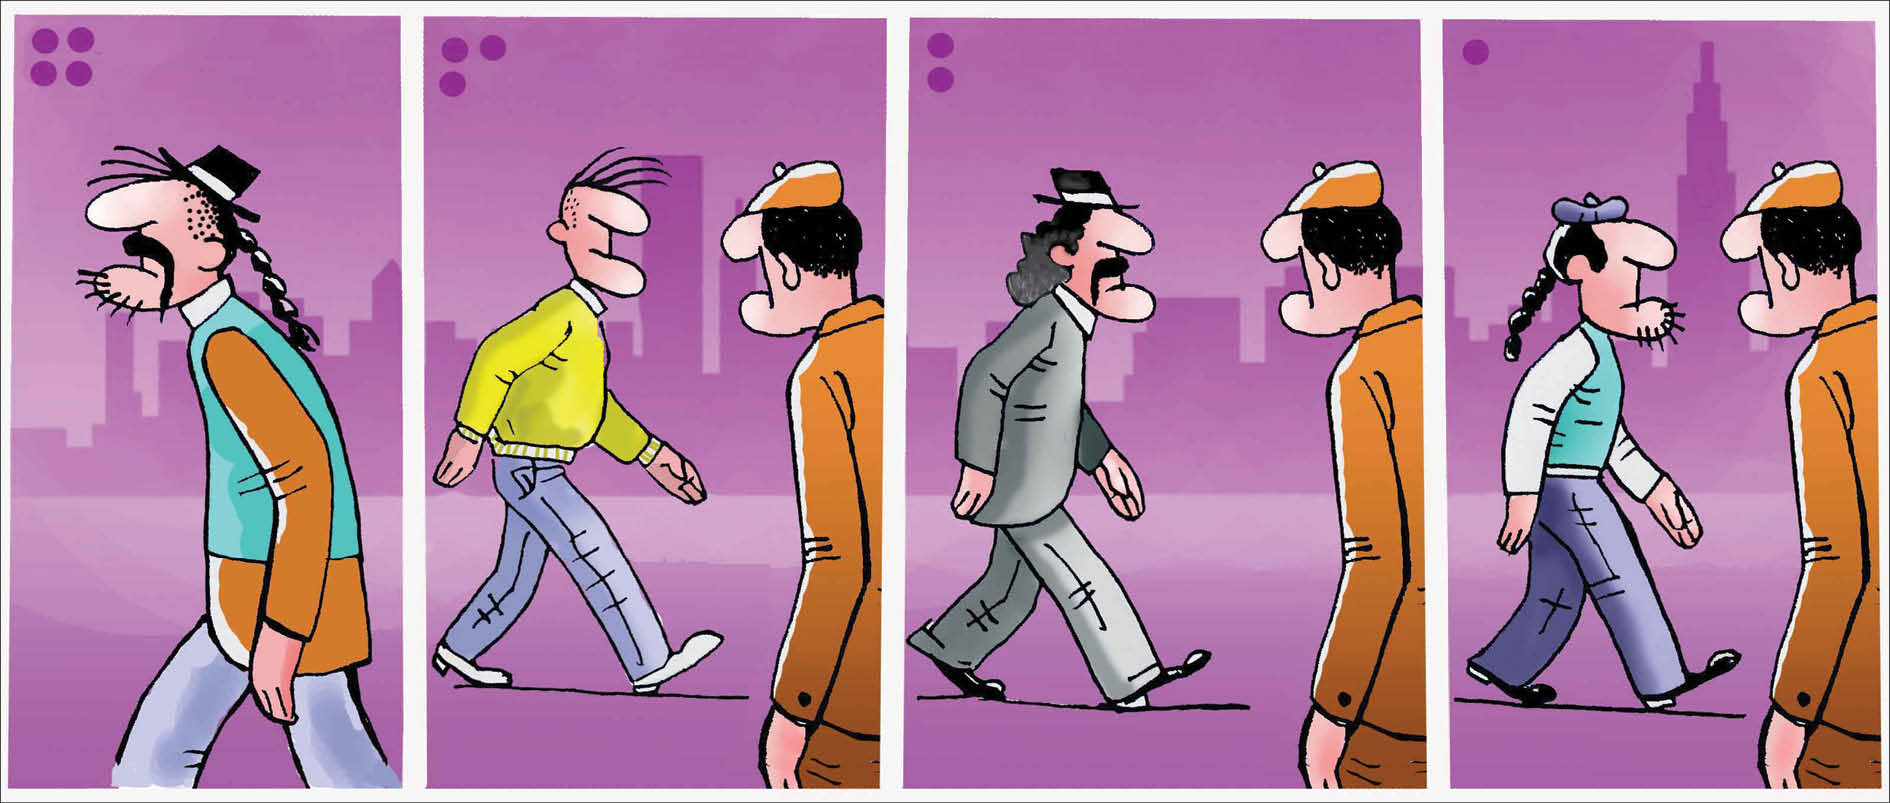 کارتونیست: حسین نقیب